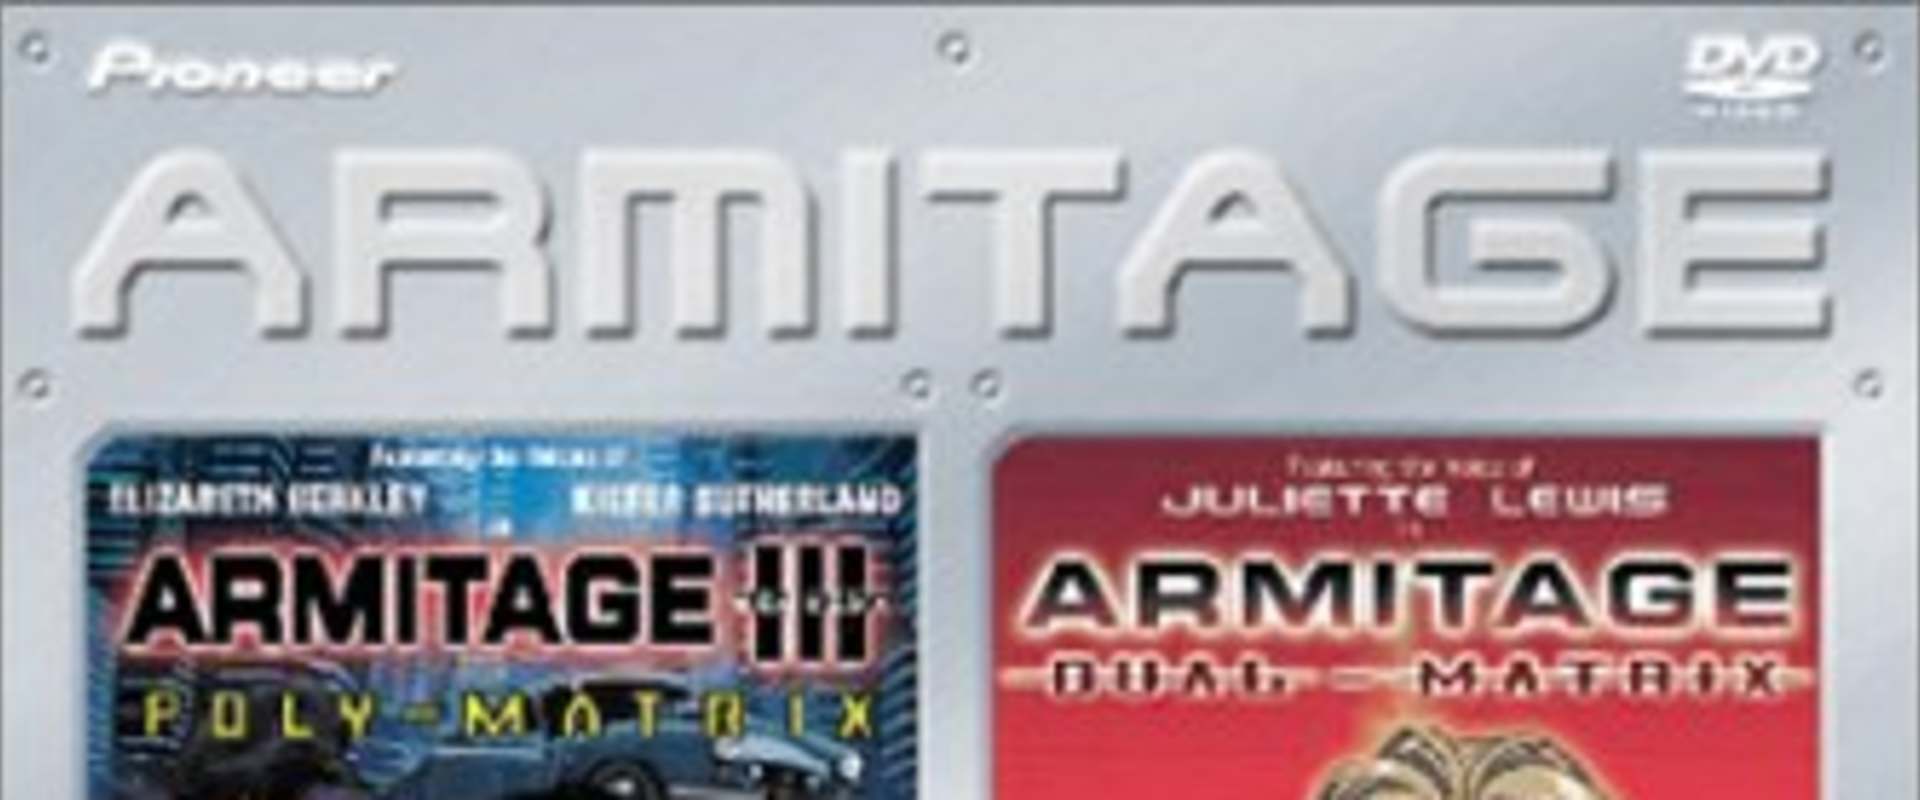 Armitage: Dual Matrix background 2